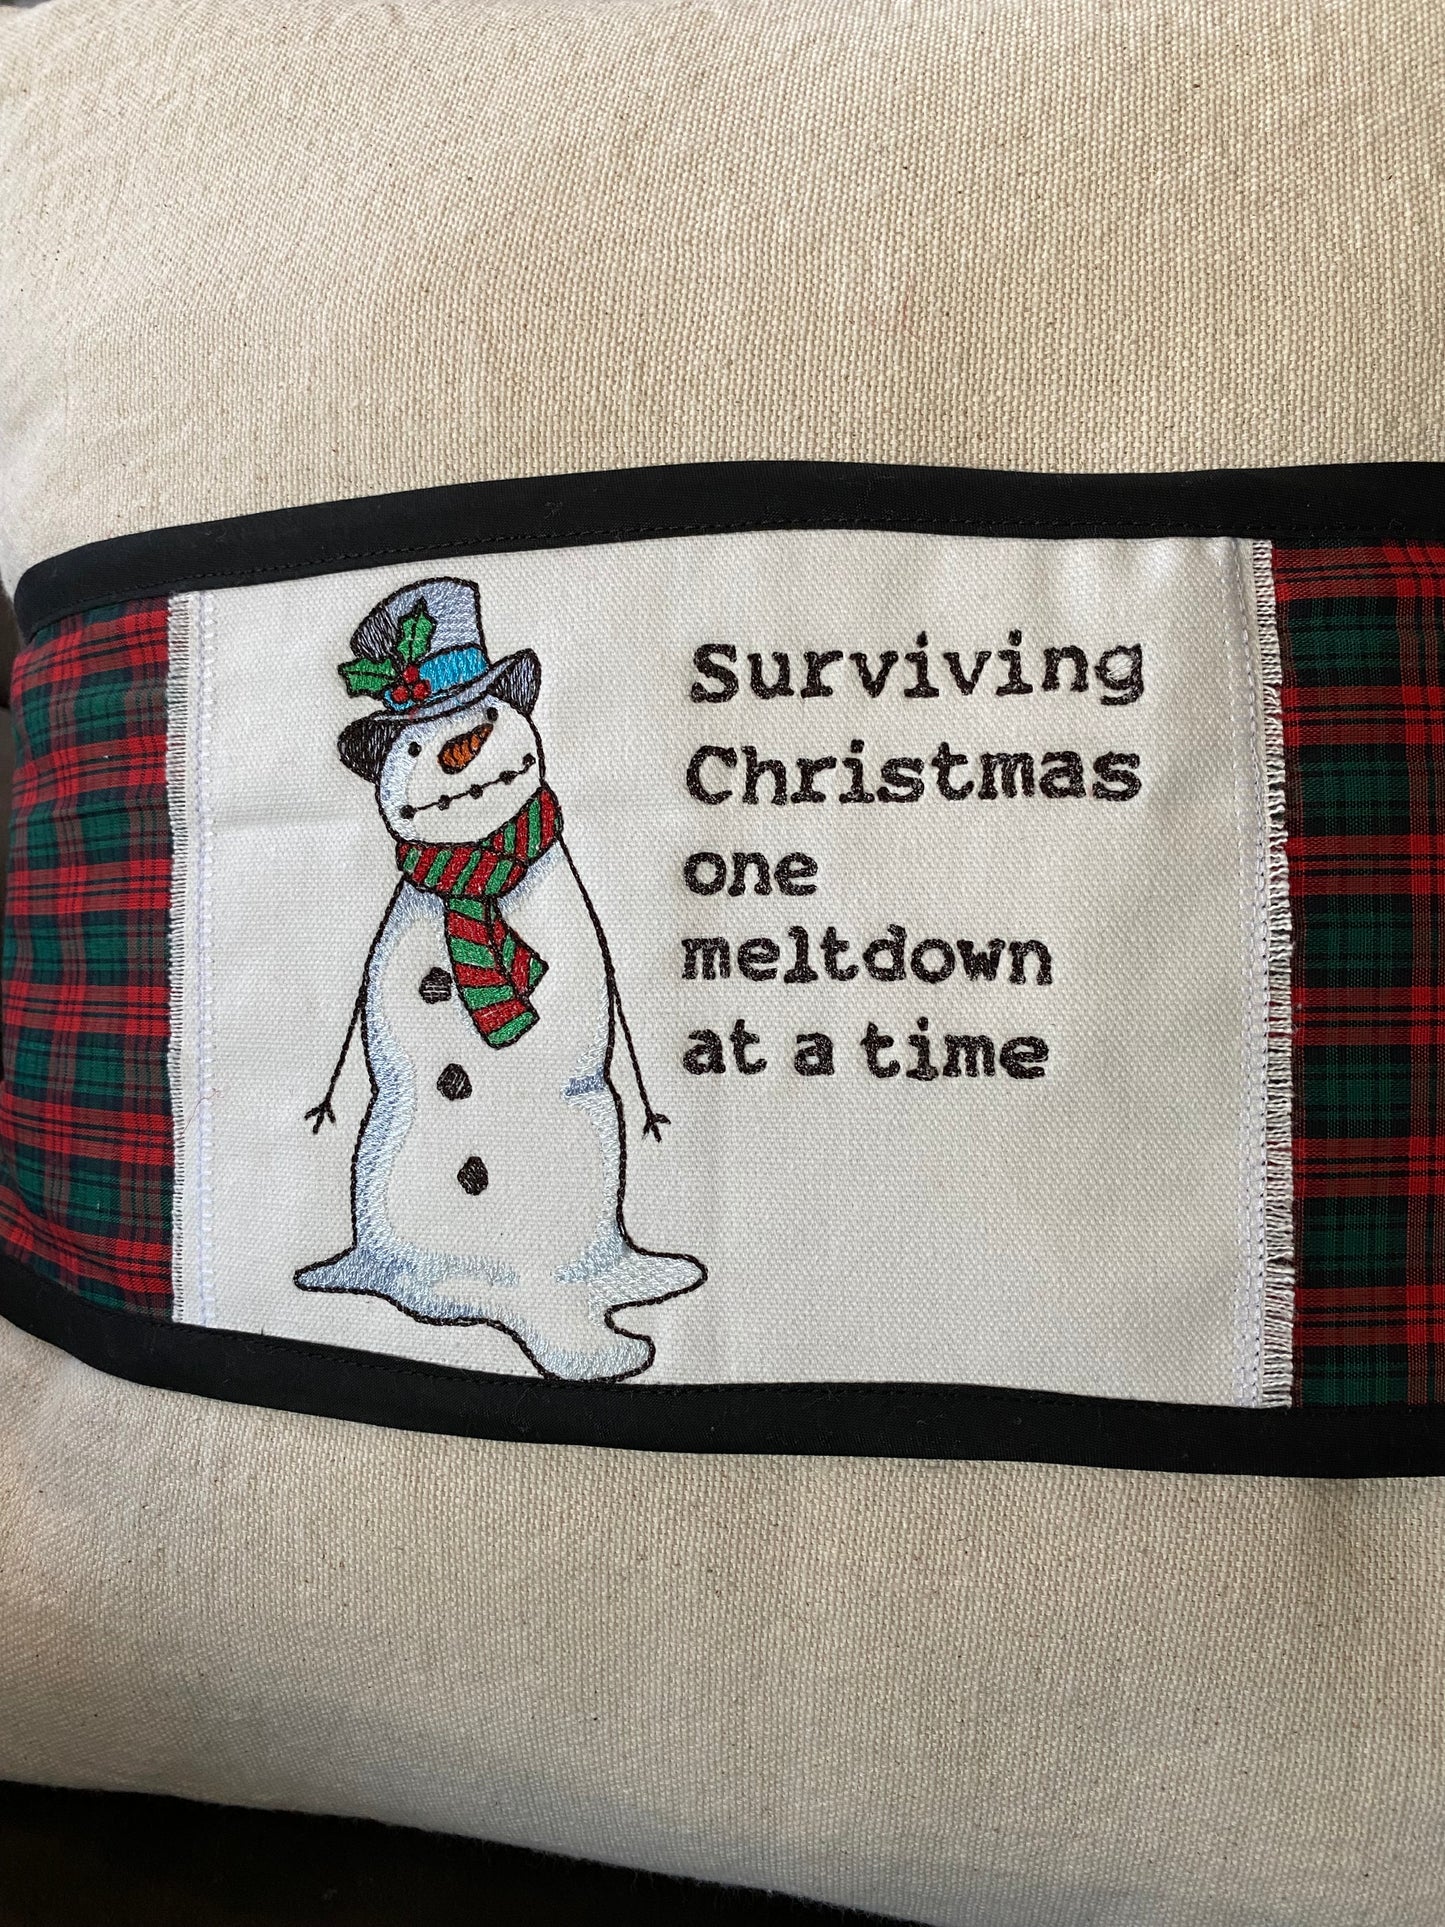 Surviving Christmas Snowman Pillow Wrap